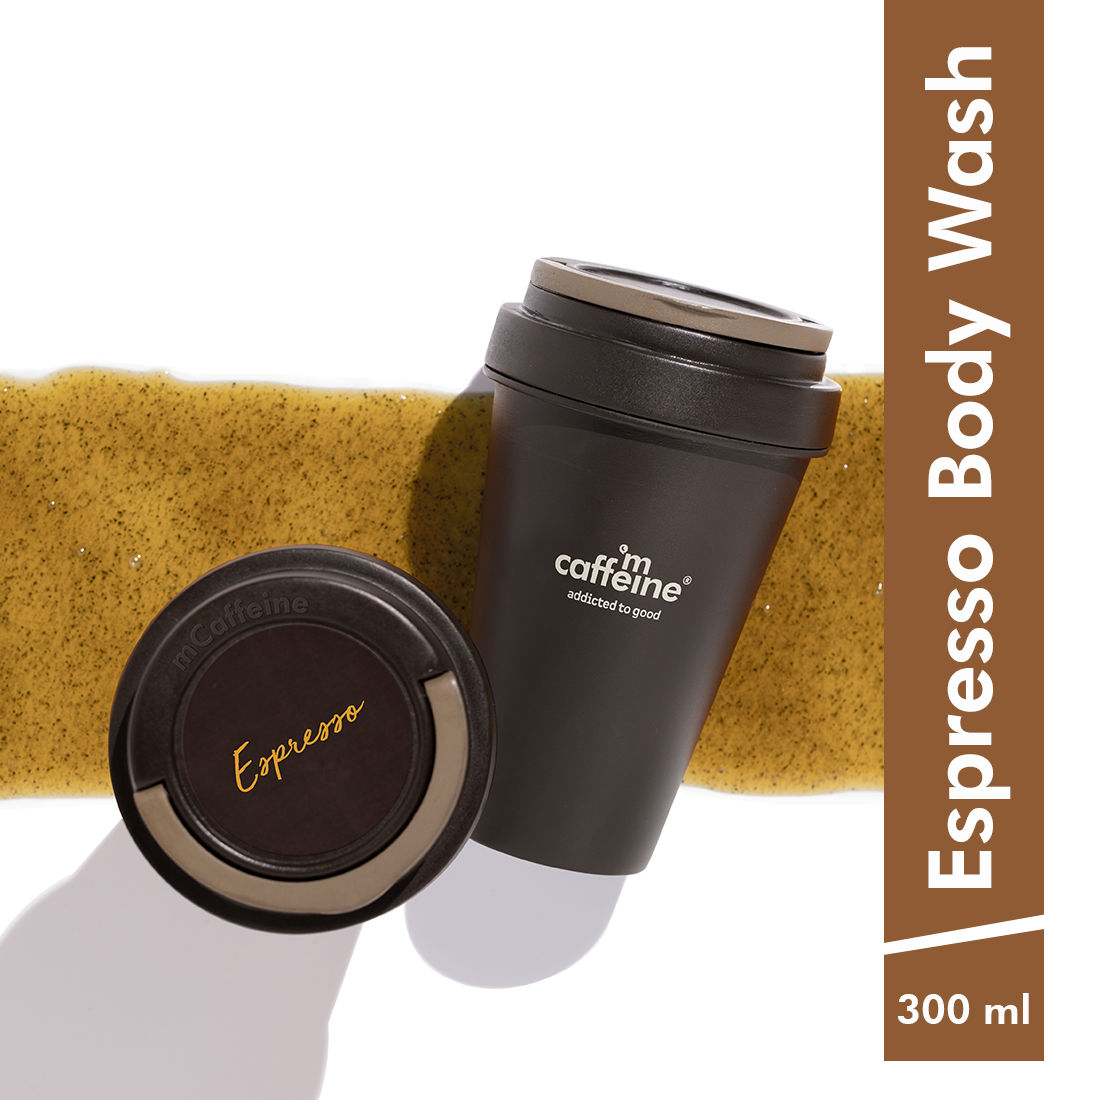 MCaffeine Body Wash with Coffee Scrub for Exfoliation - Espresso Shower Gel with Refreshing Aroma